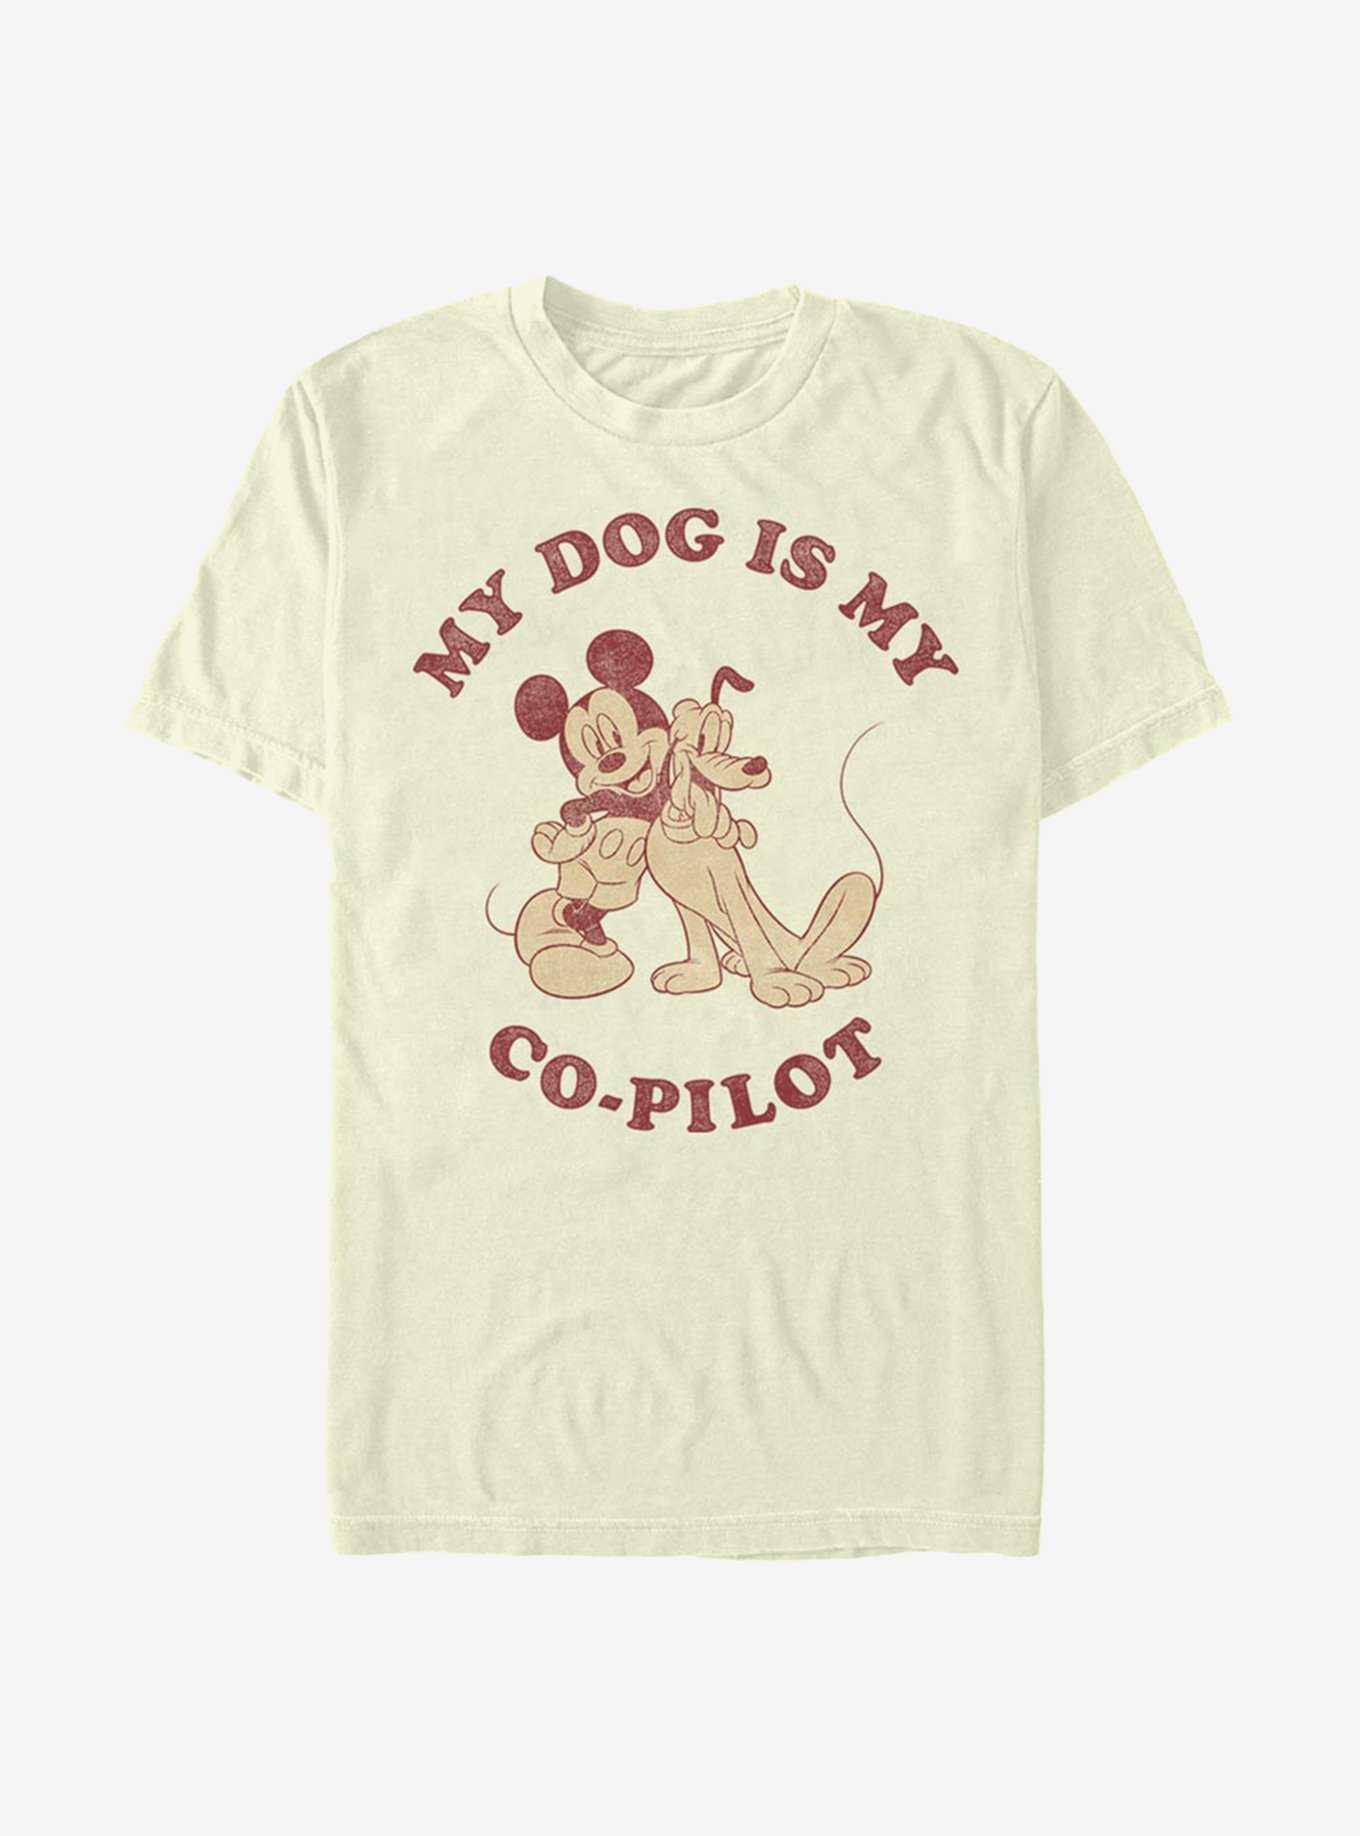 Disney Mickey Mouse Co-Pilot T-Shirt, , hi-res